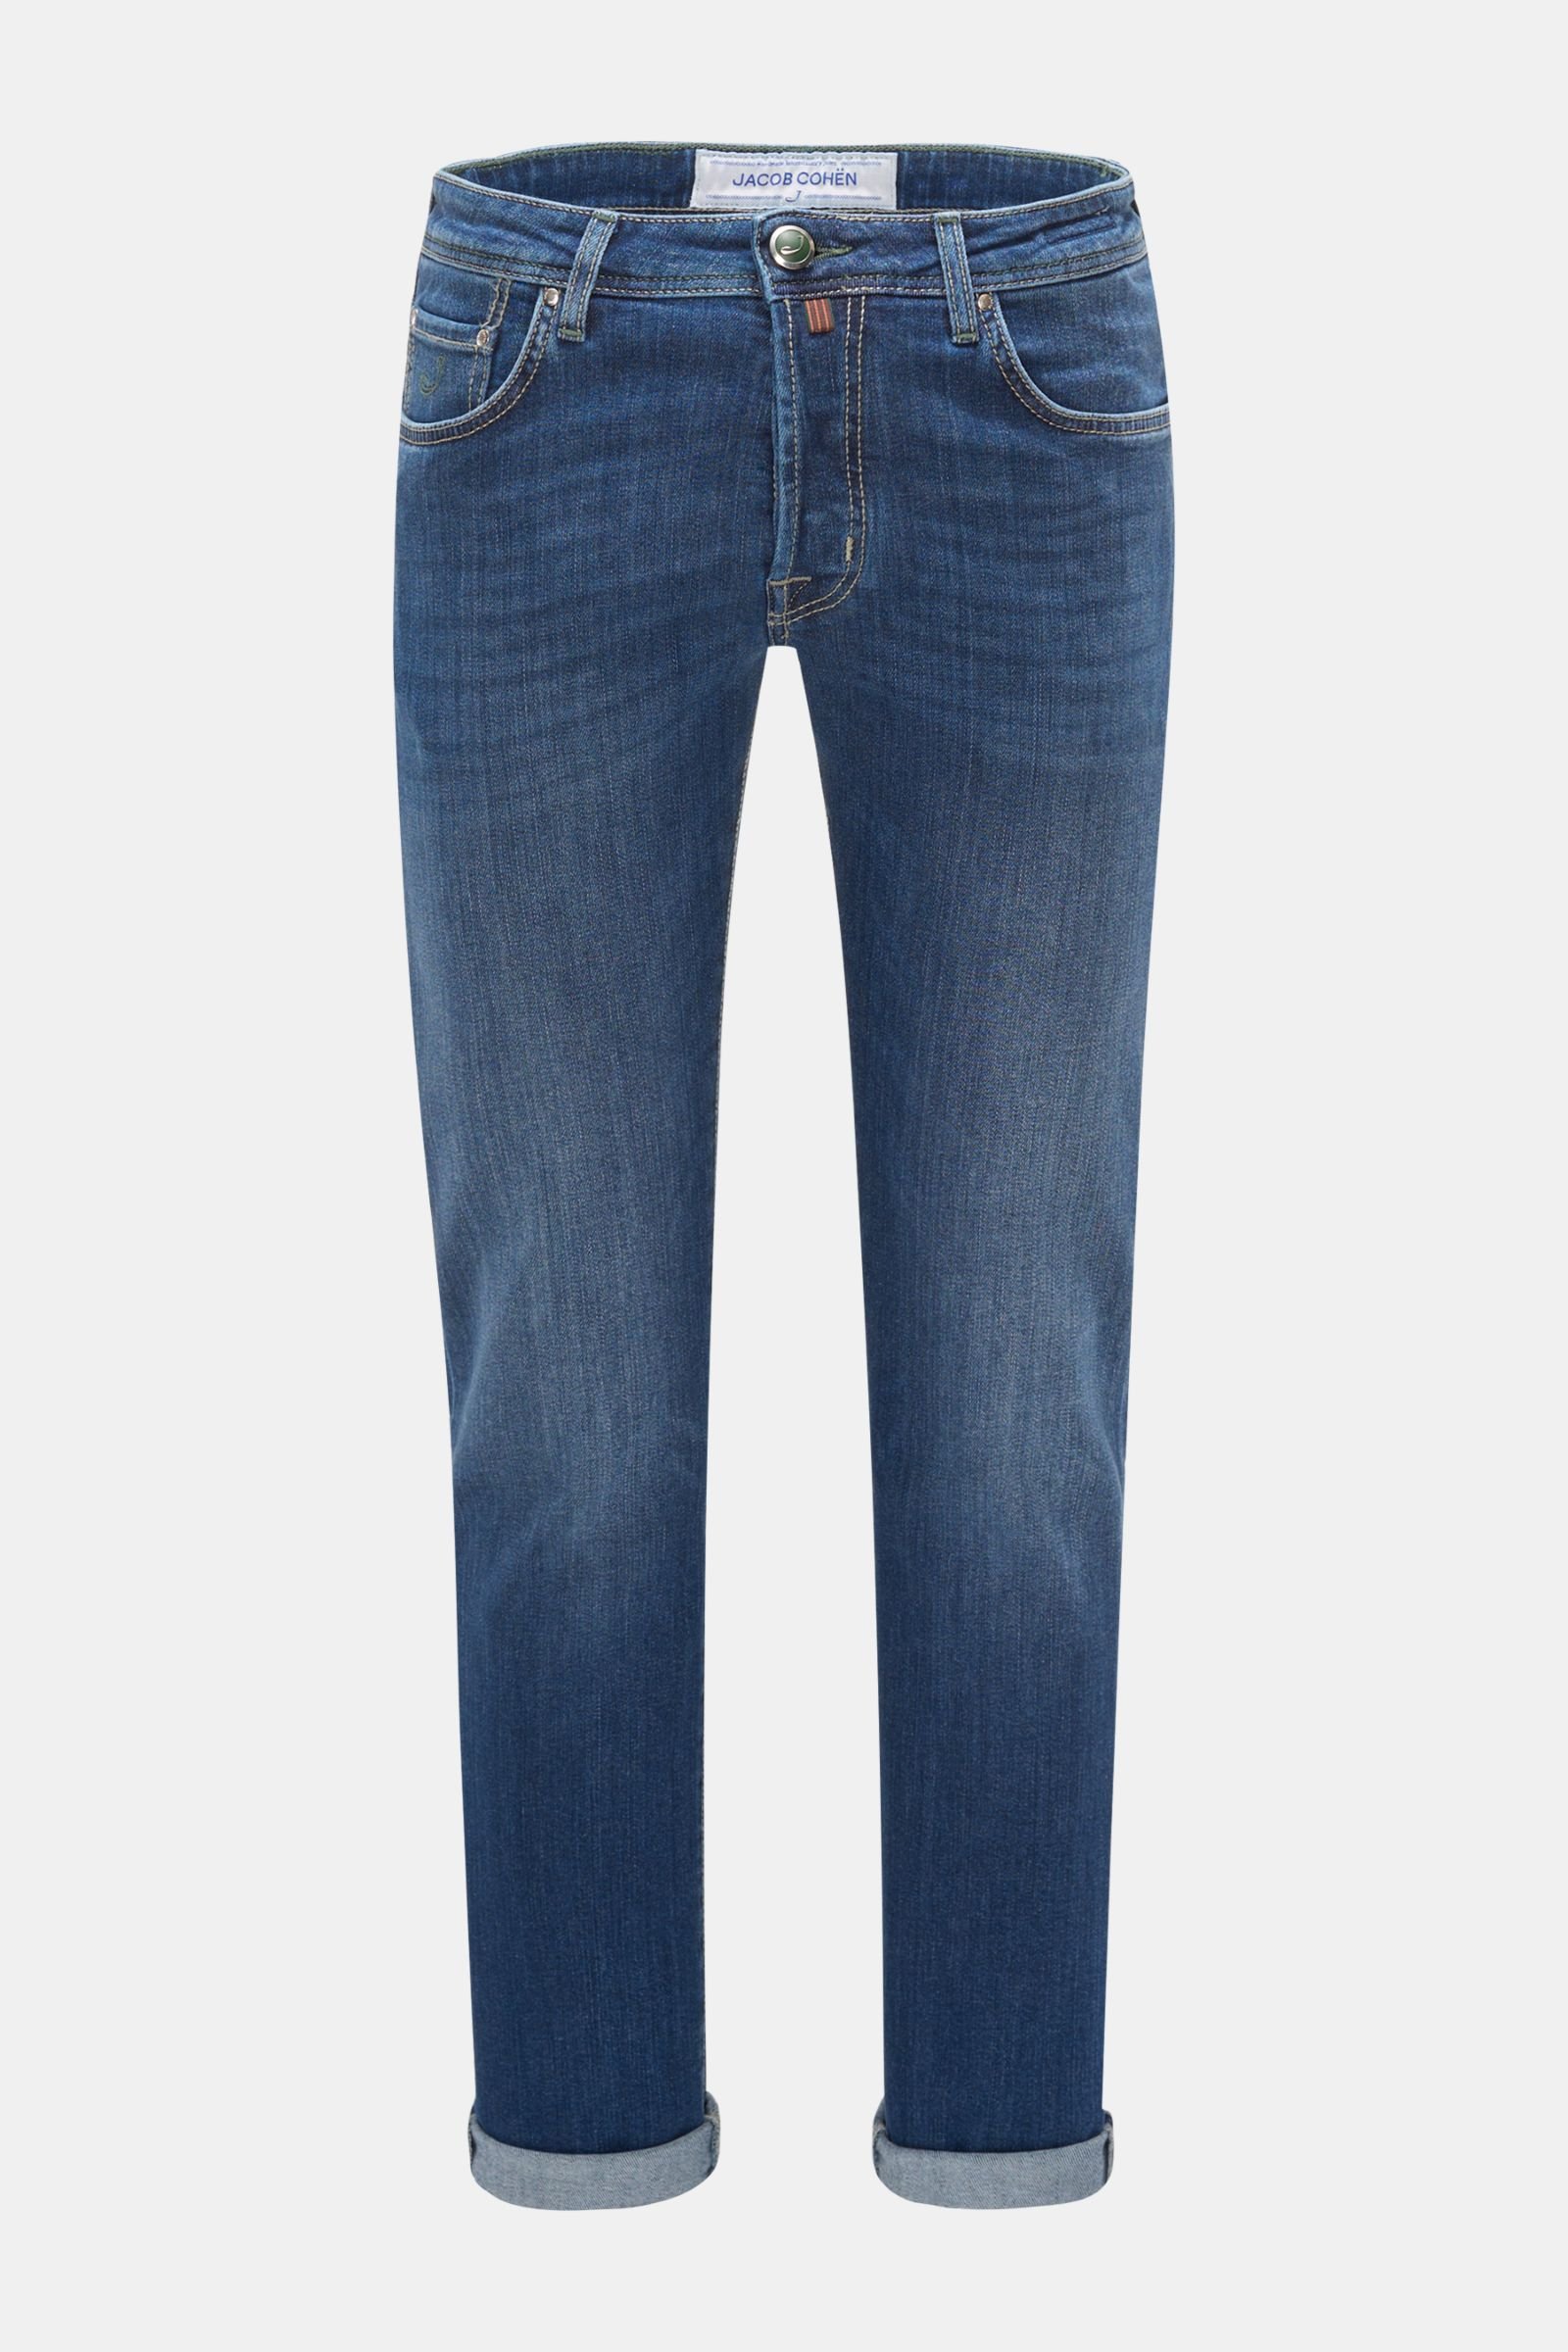 Jeans 'J688 Comfort Extra Slim Fit' grey-blue